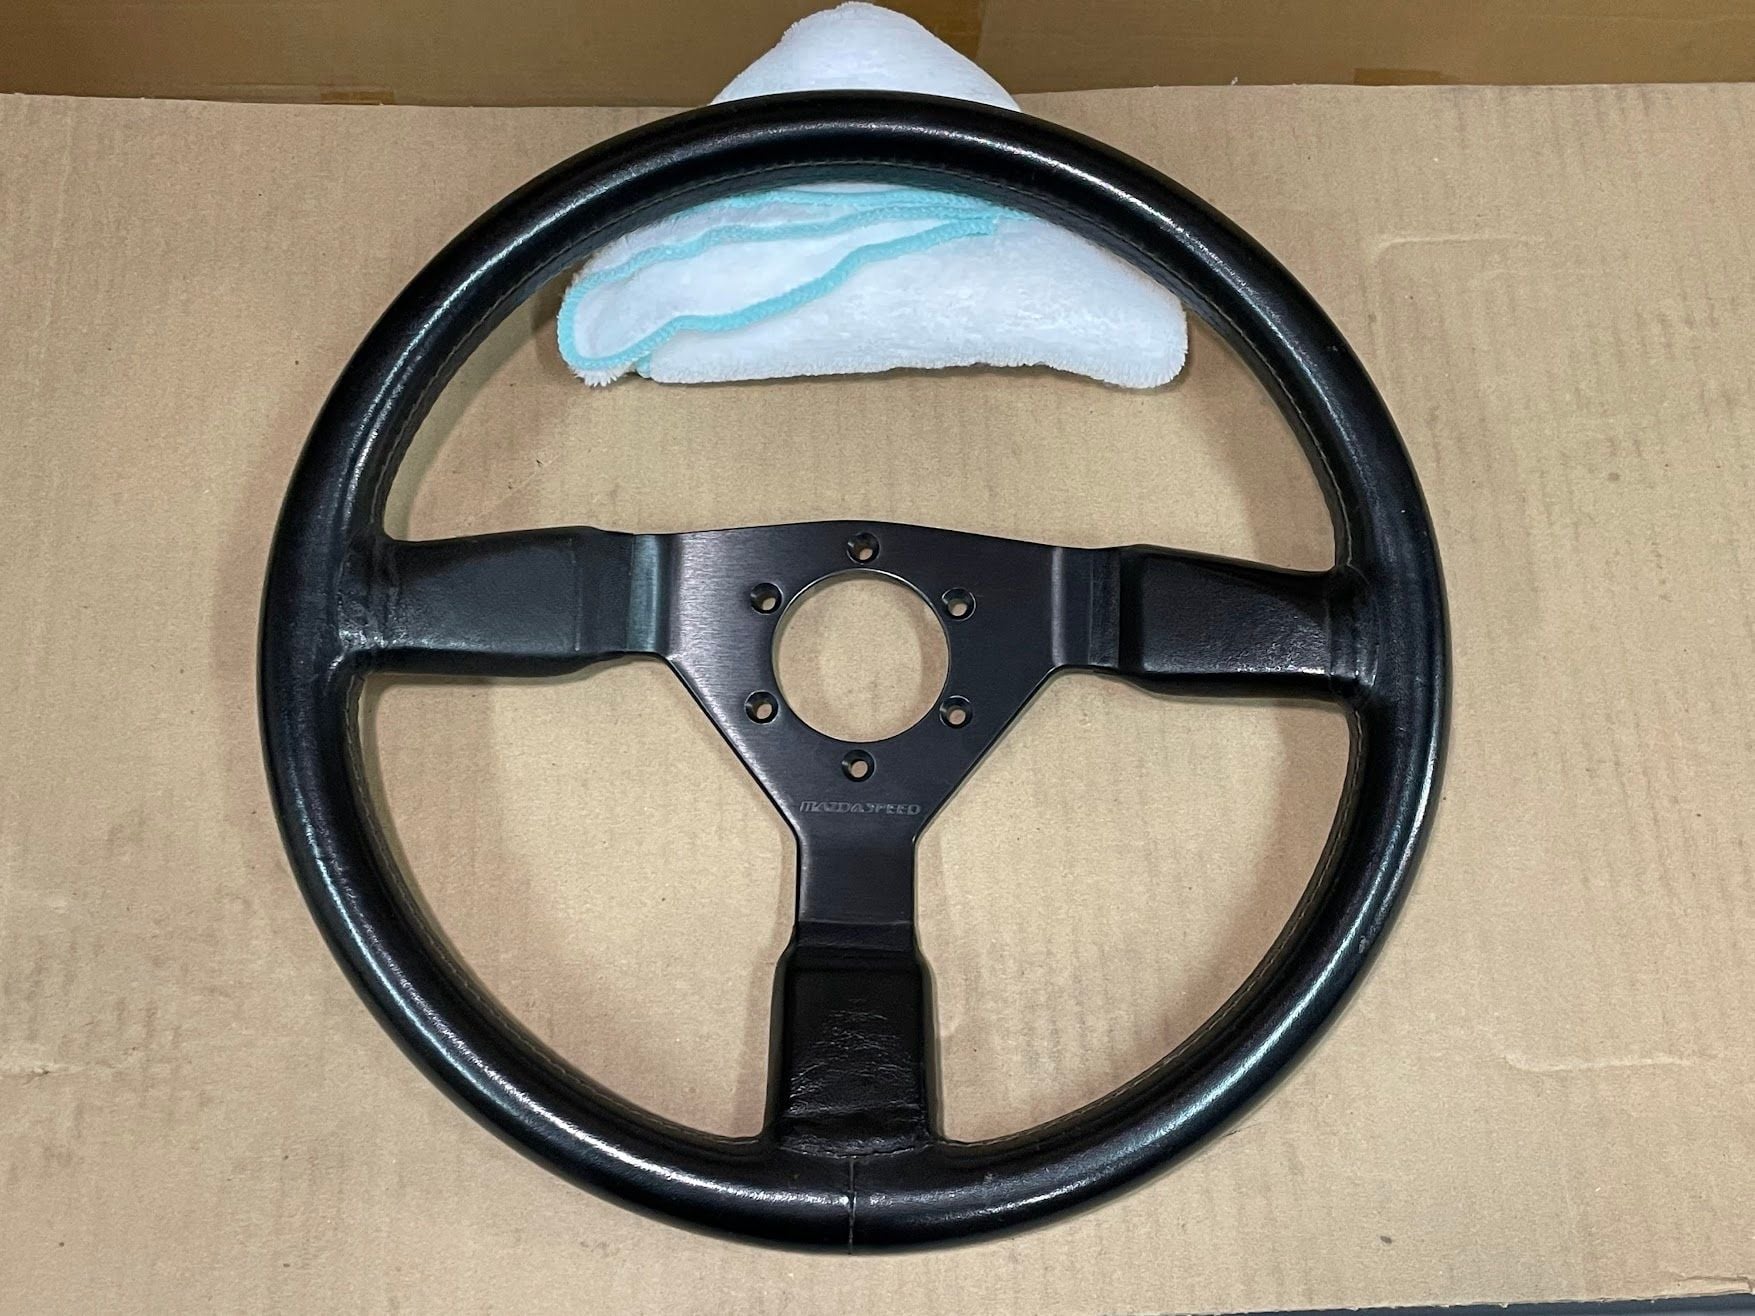 1994 Mazda RX-7 - Old School MS Steering Wheel - Accessories - $750 - San Jose, CA 95112, United States